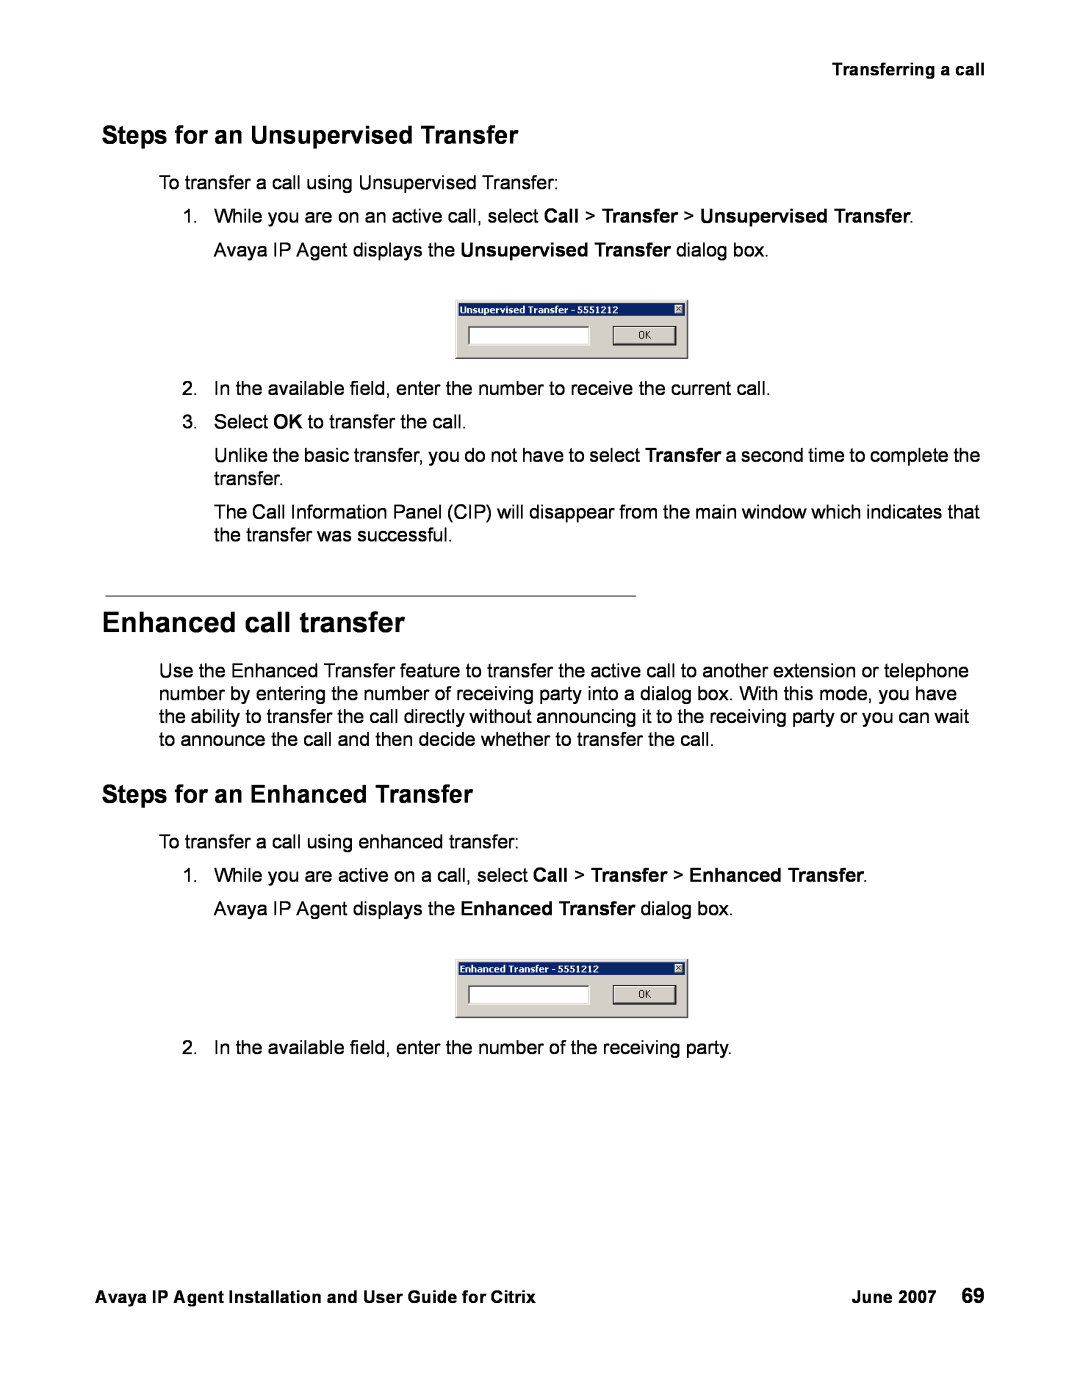 Avaya 7 manual Enhanced call transfer, Steps for an Unsupervised Transfer, Steps for an Enhanced Transfer 